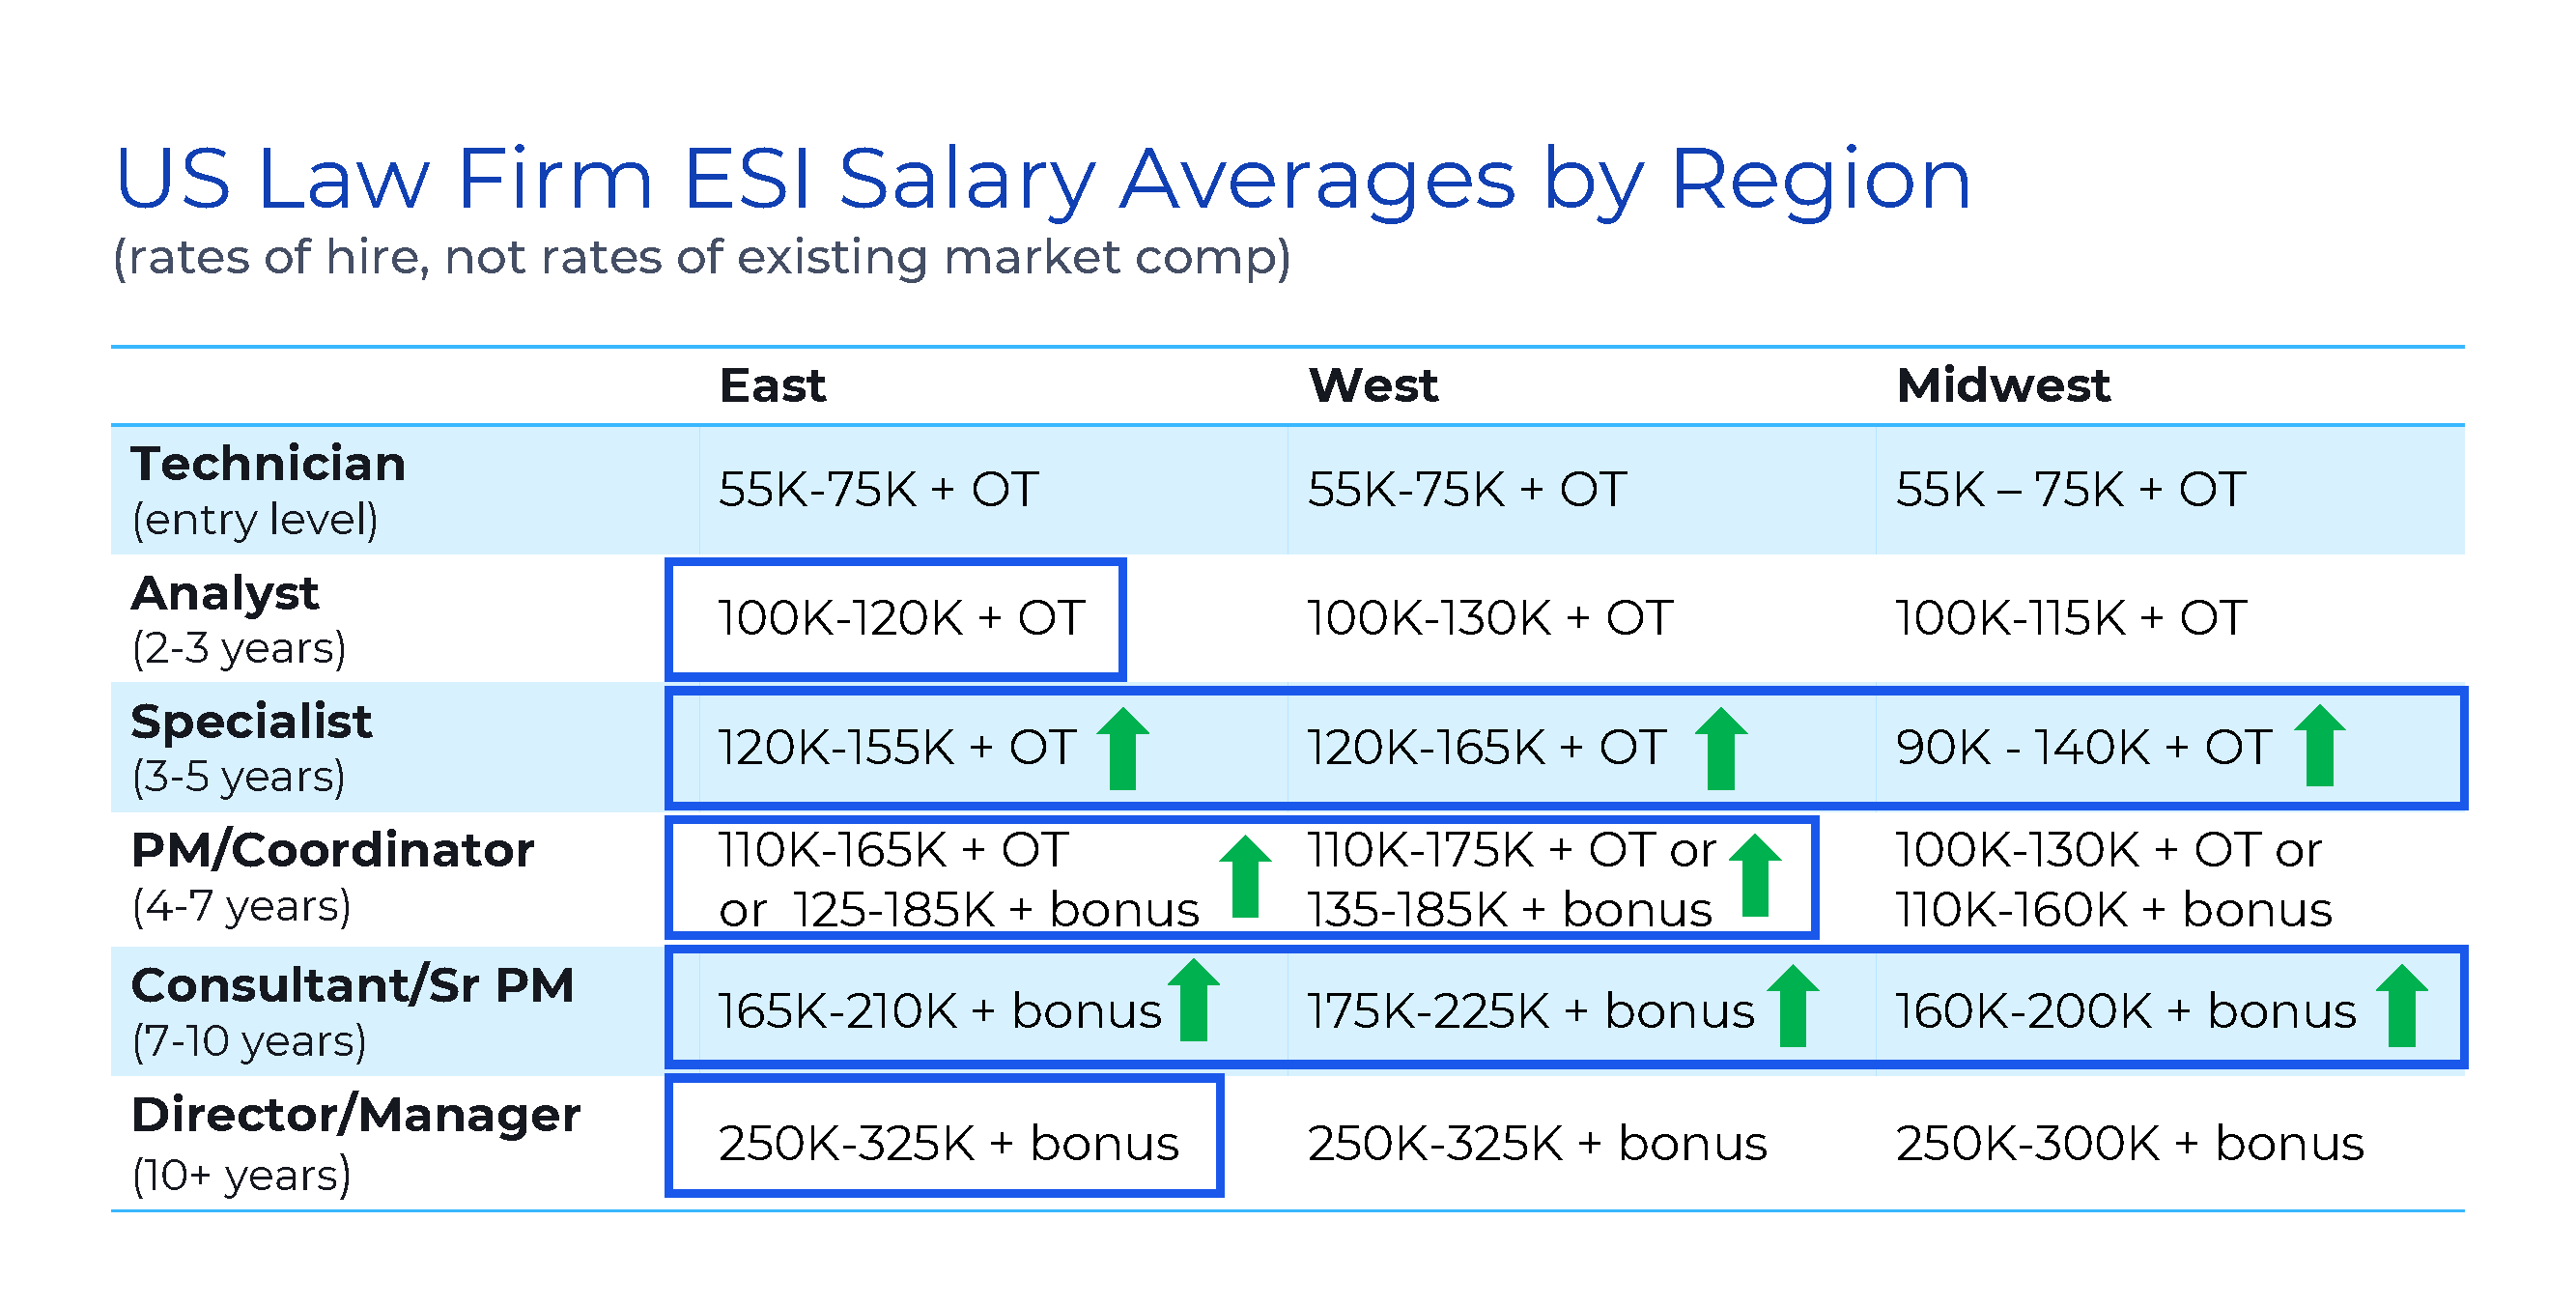 esi salary averages by region